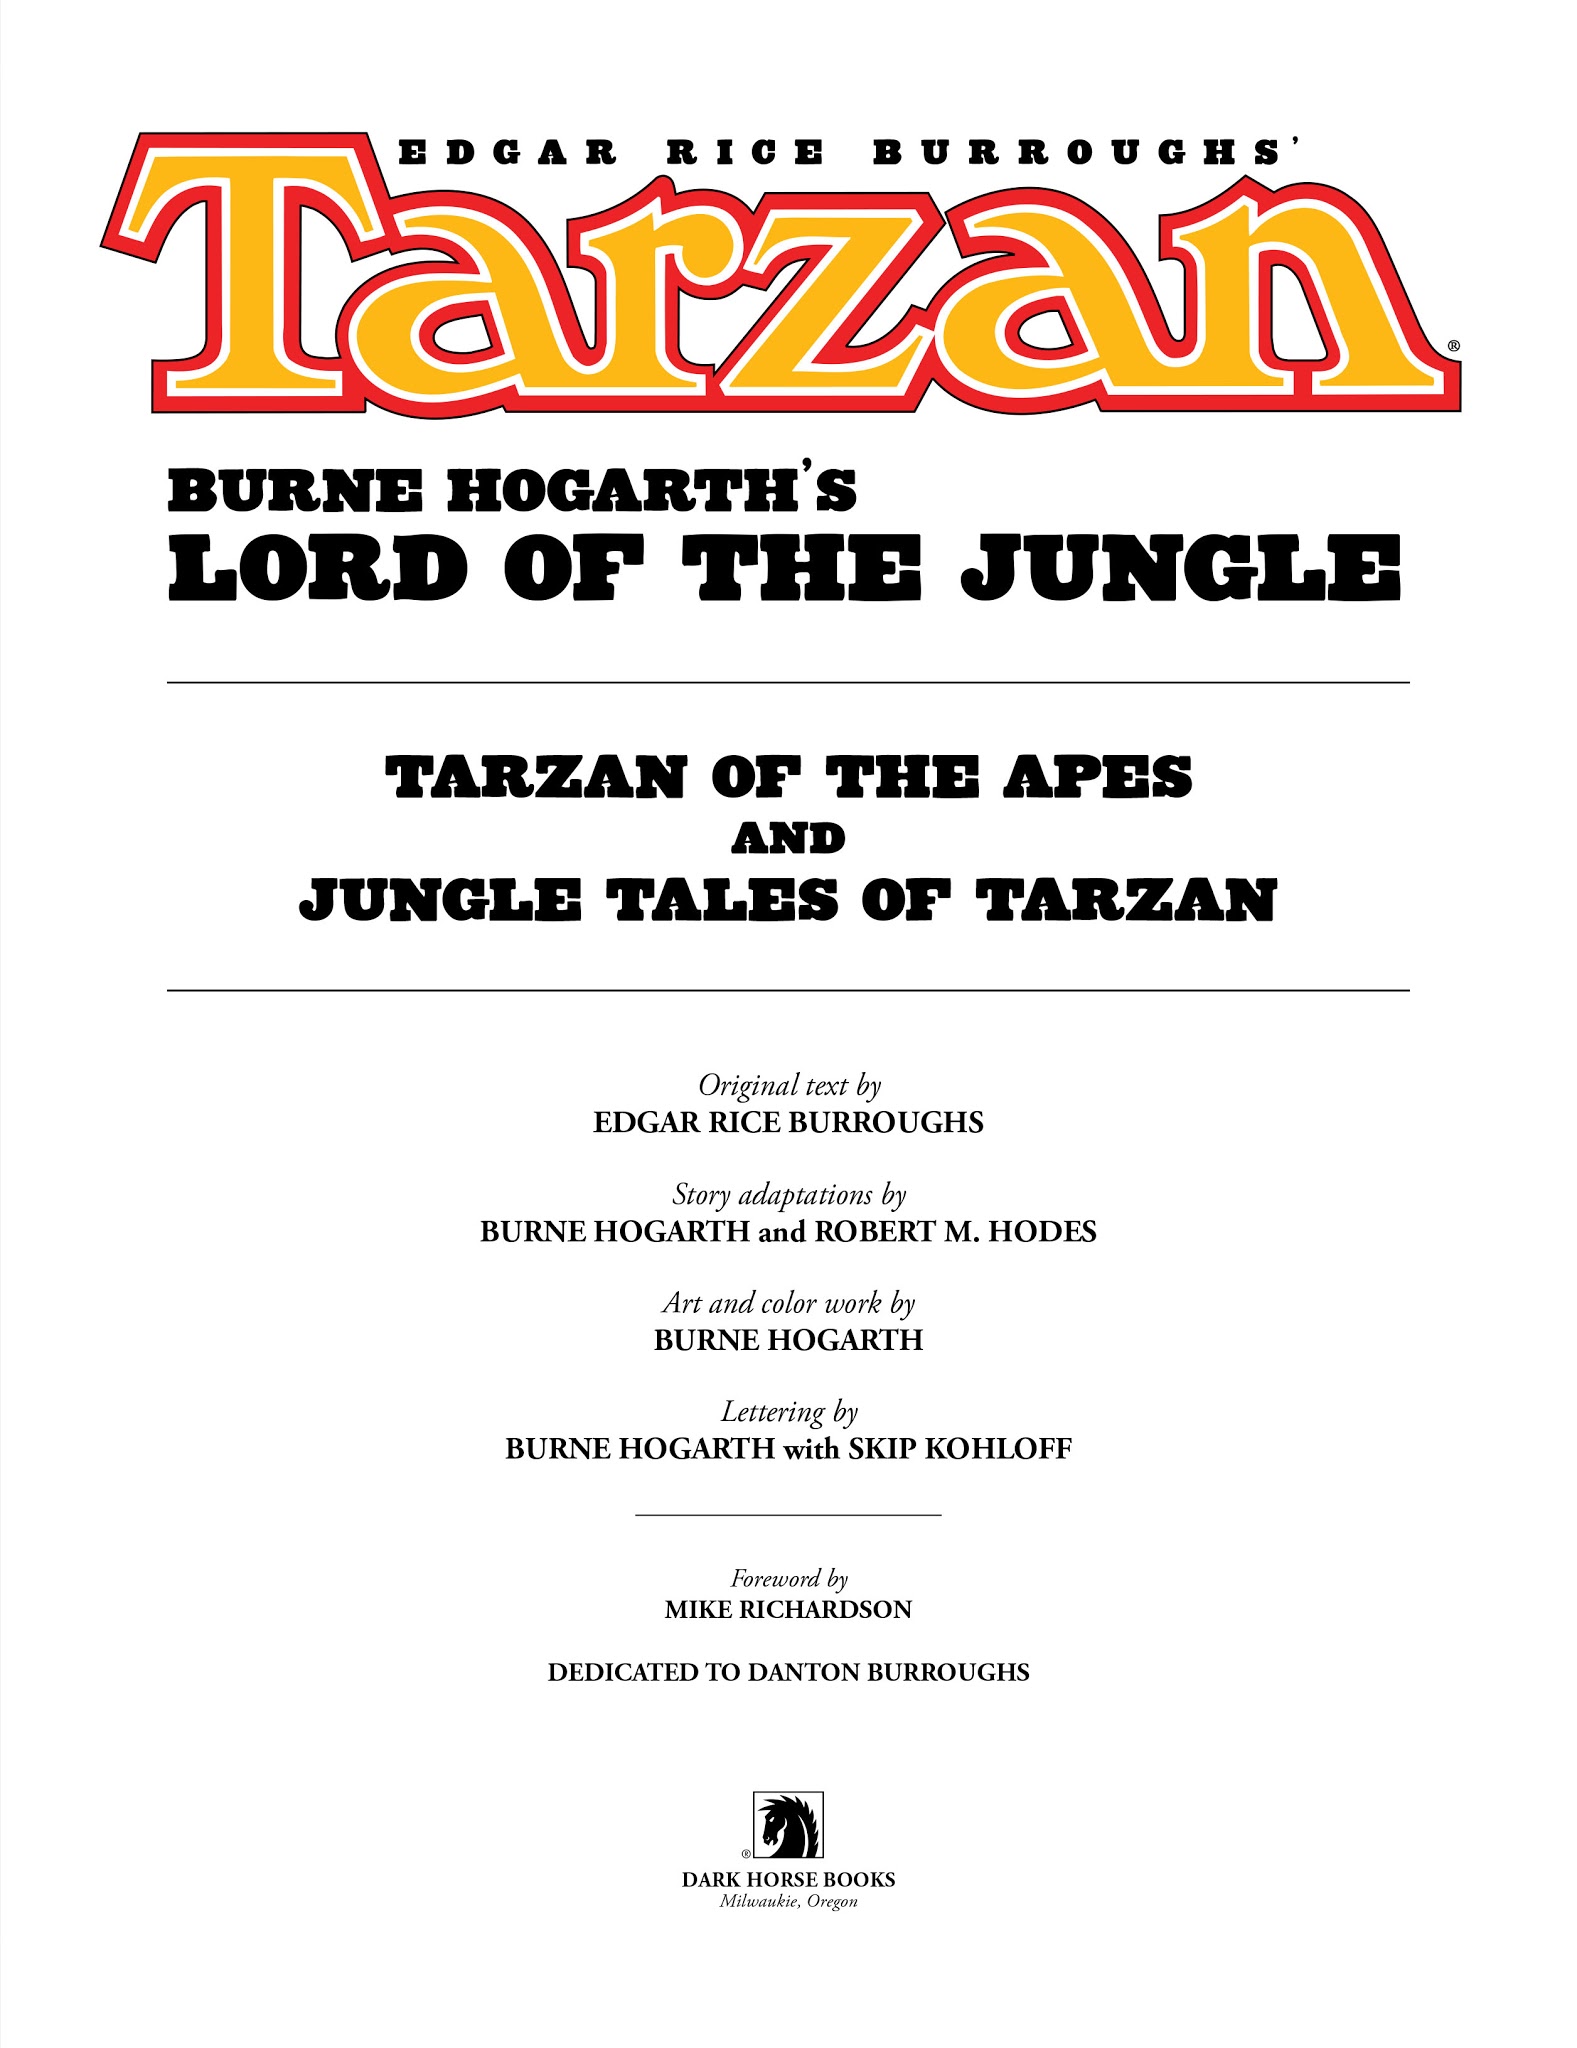 Read online Edgar Rice Burroughs' Tarzan: Burne Hogarth's Lord of the Jungle comic -  Issue # TPB - 5